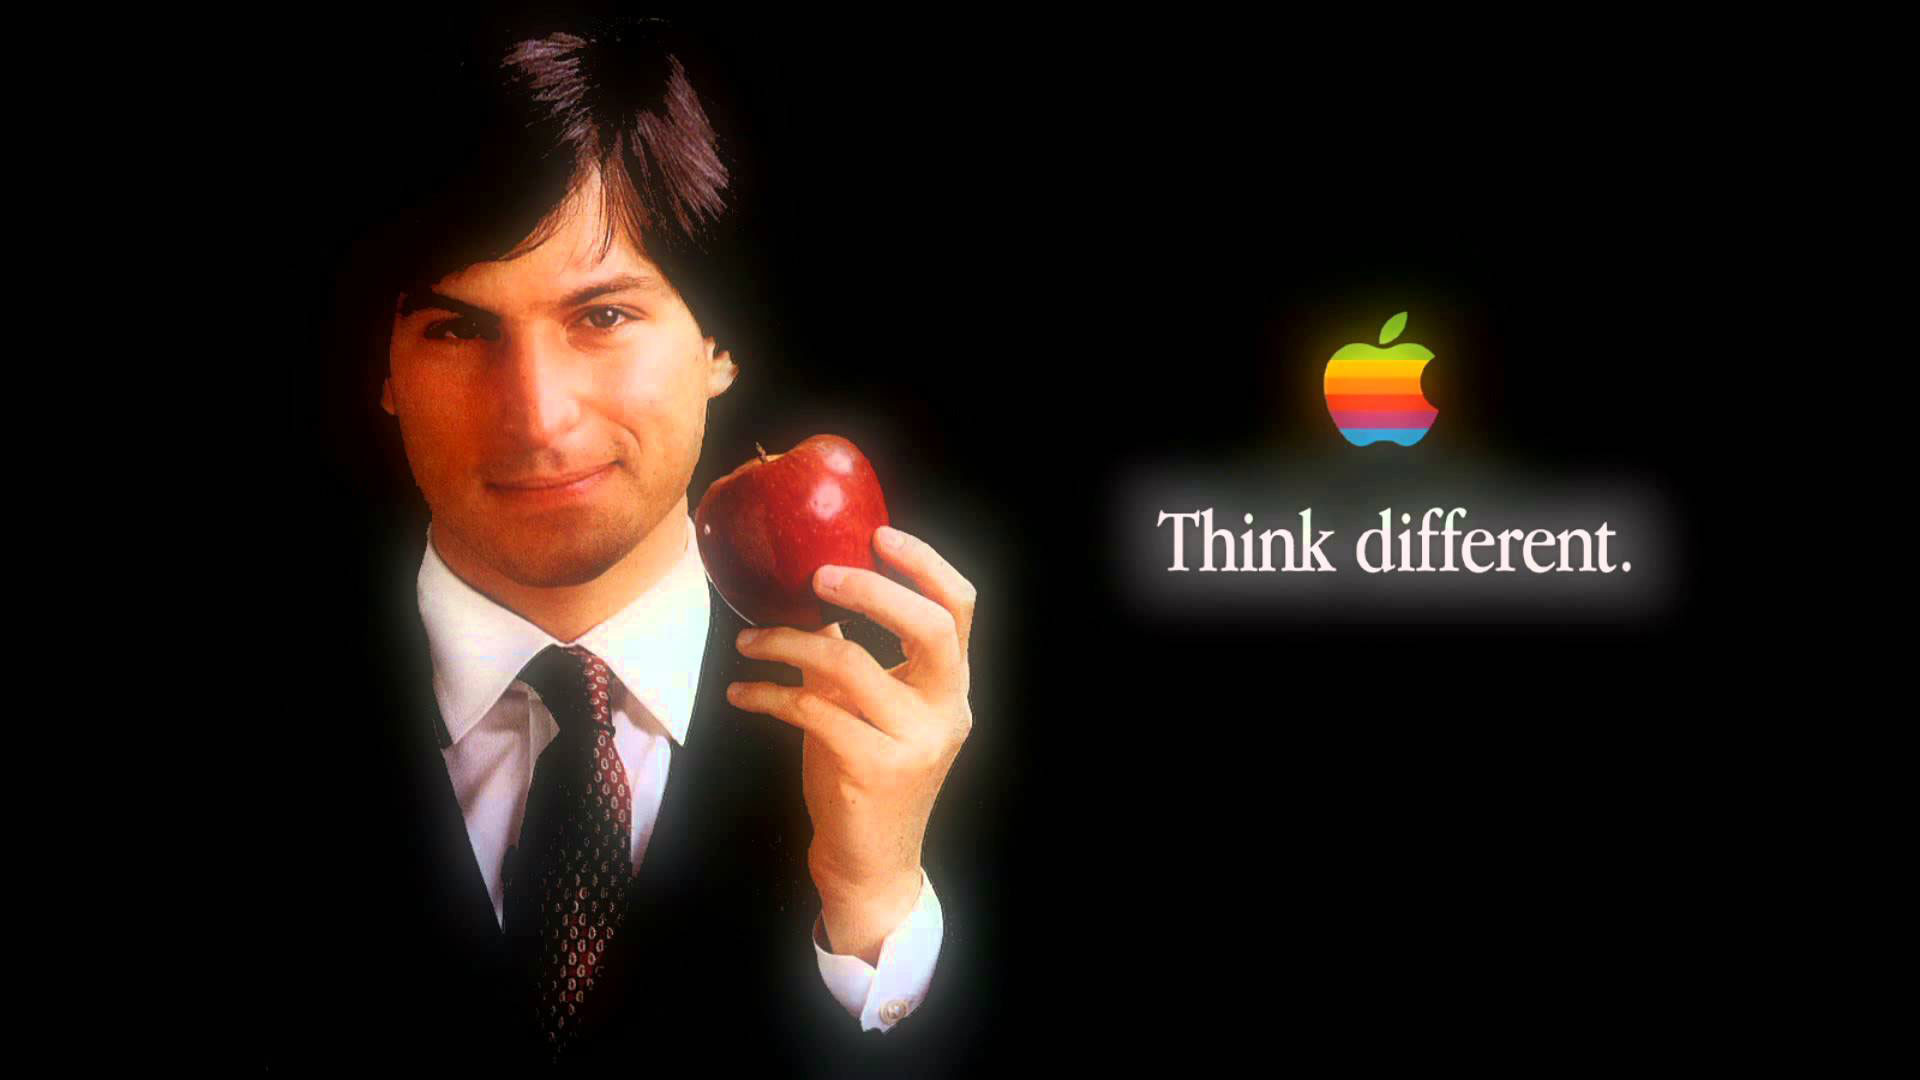 hd pics photos stunning attractive apple think different 11 hd desktop  background wallpaper